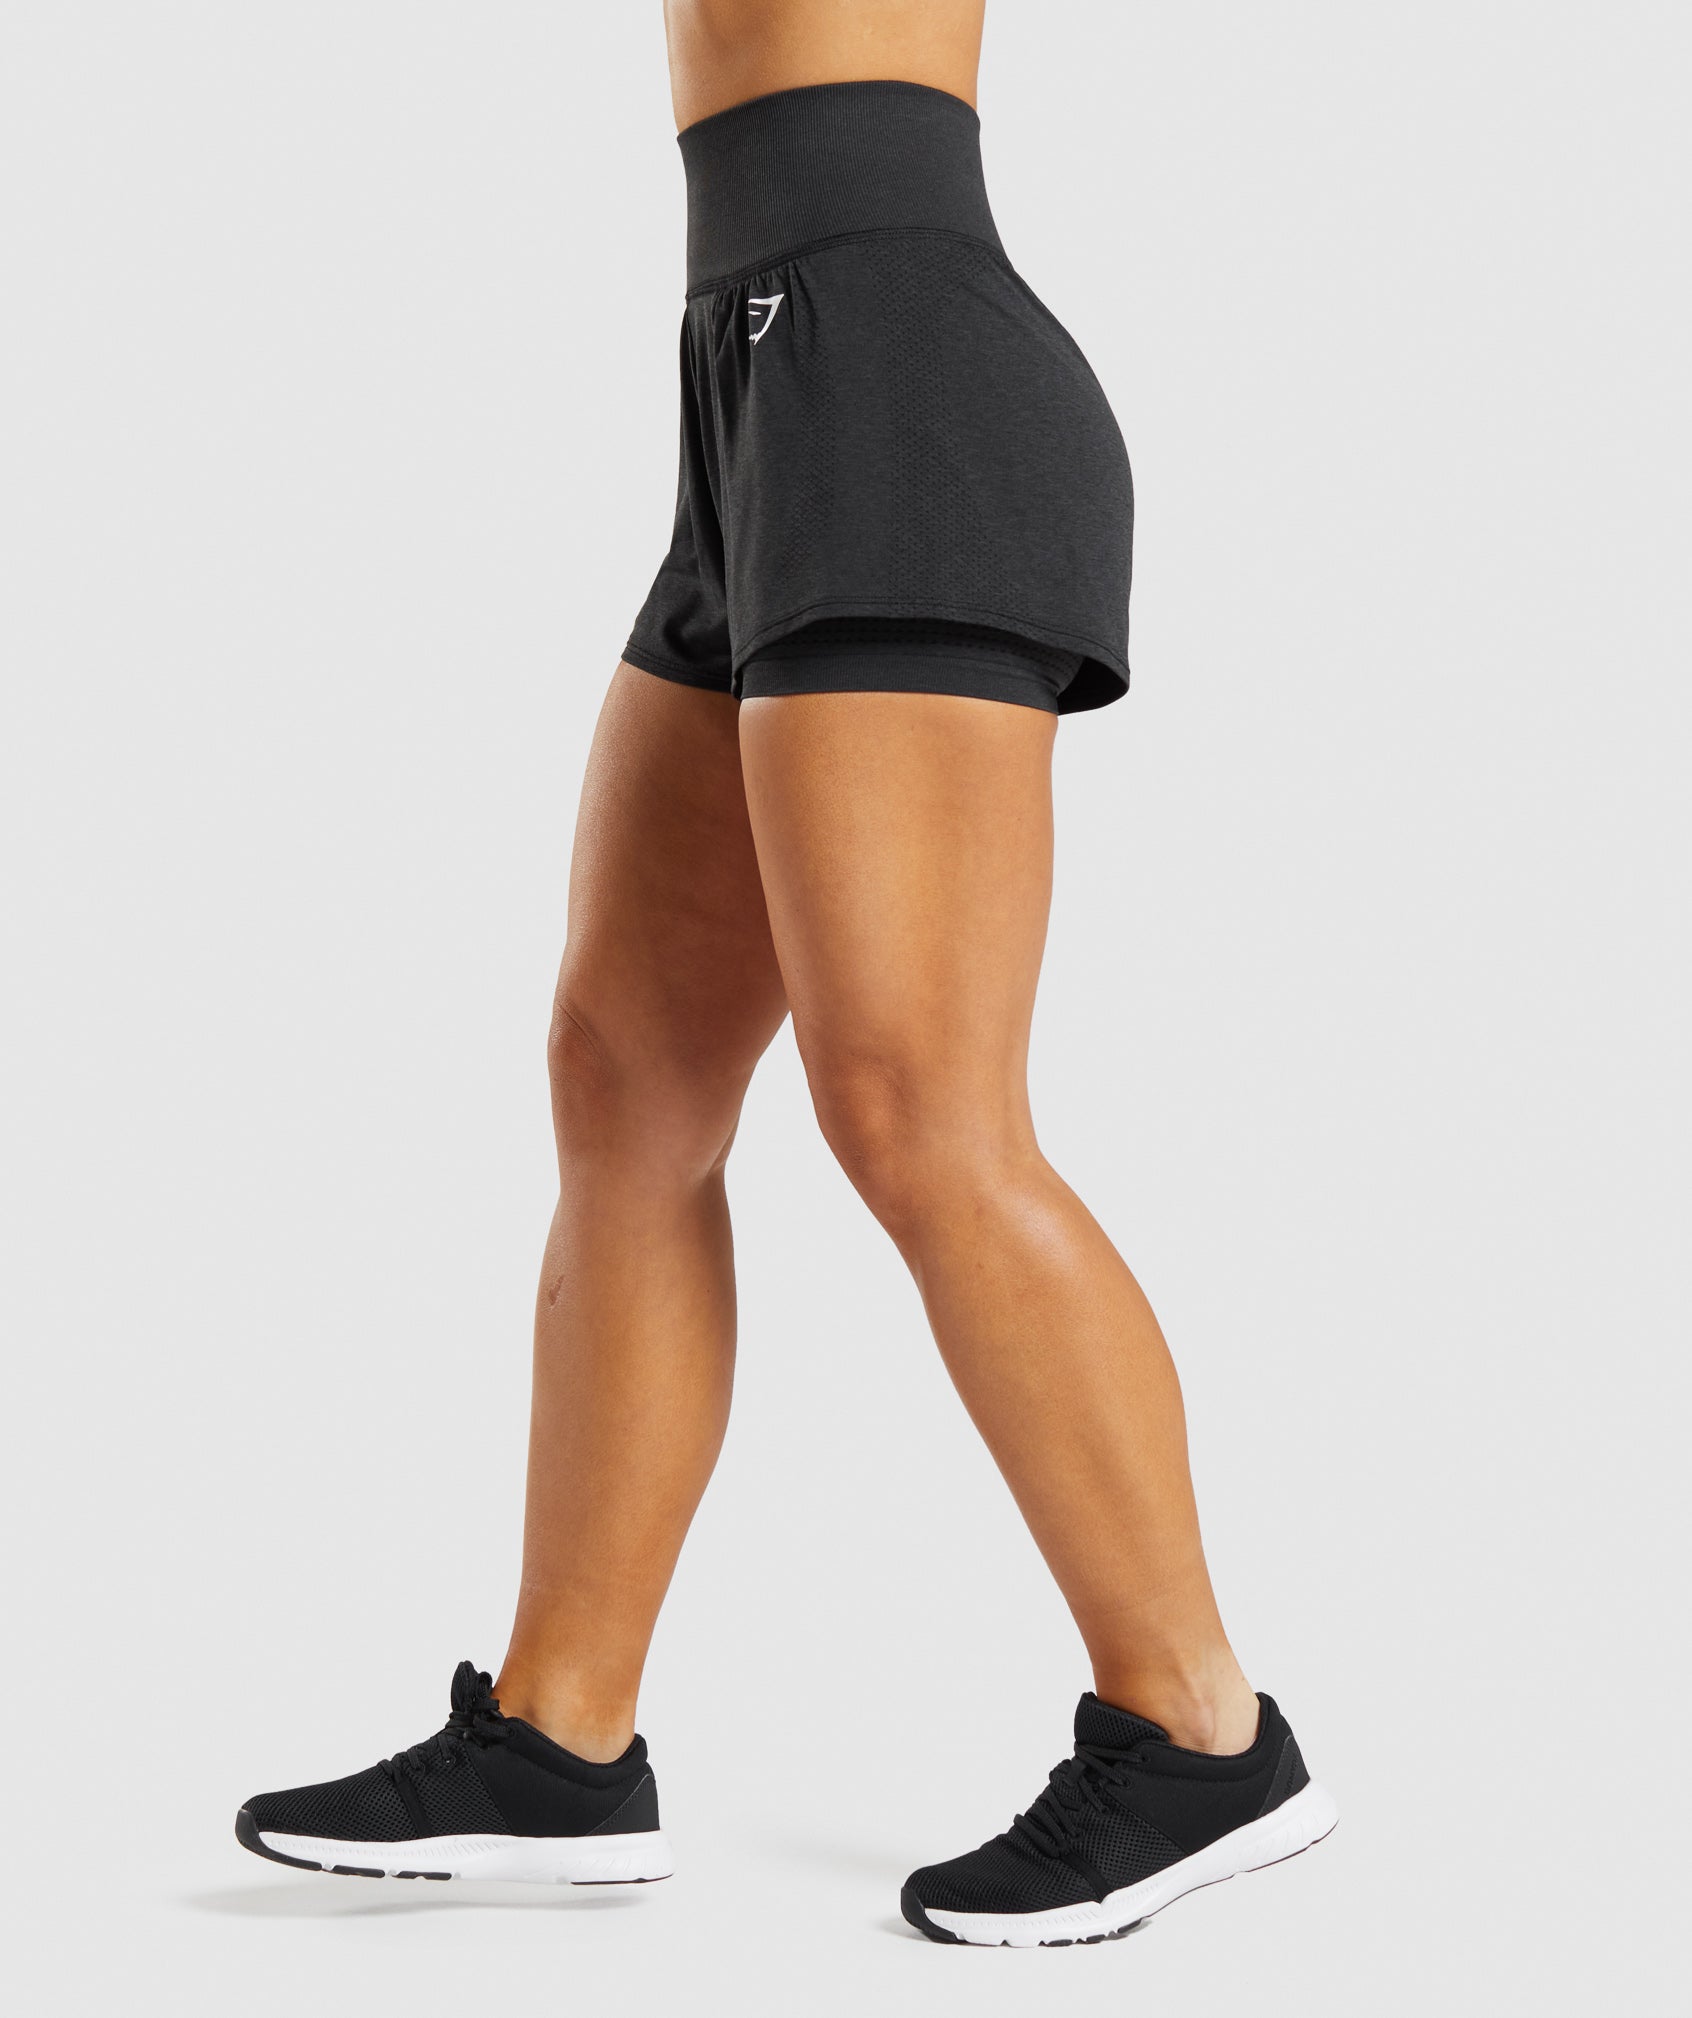 Gymshark Vital Seamless 2.0 Shorts – shop on Pinterest